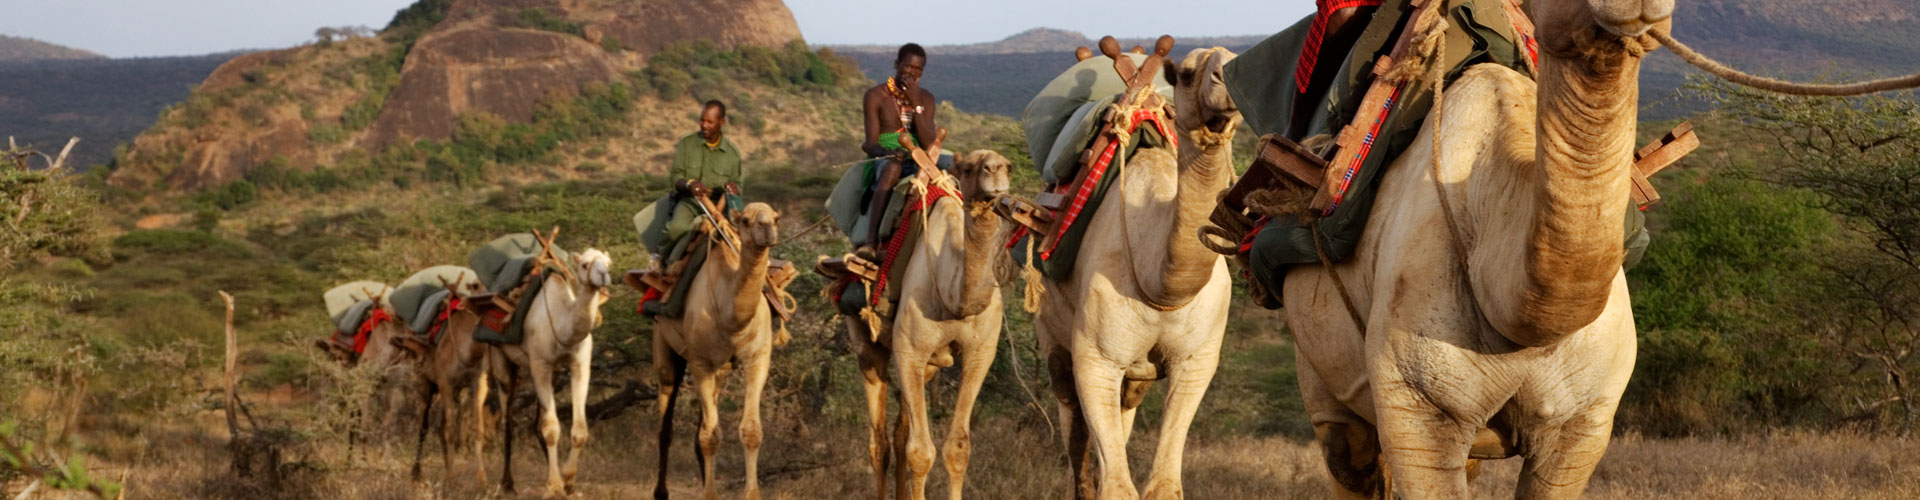 Camel Safaris Luxury Safari on Camels in Africa